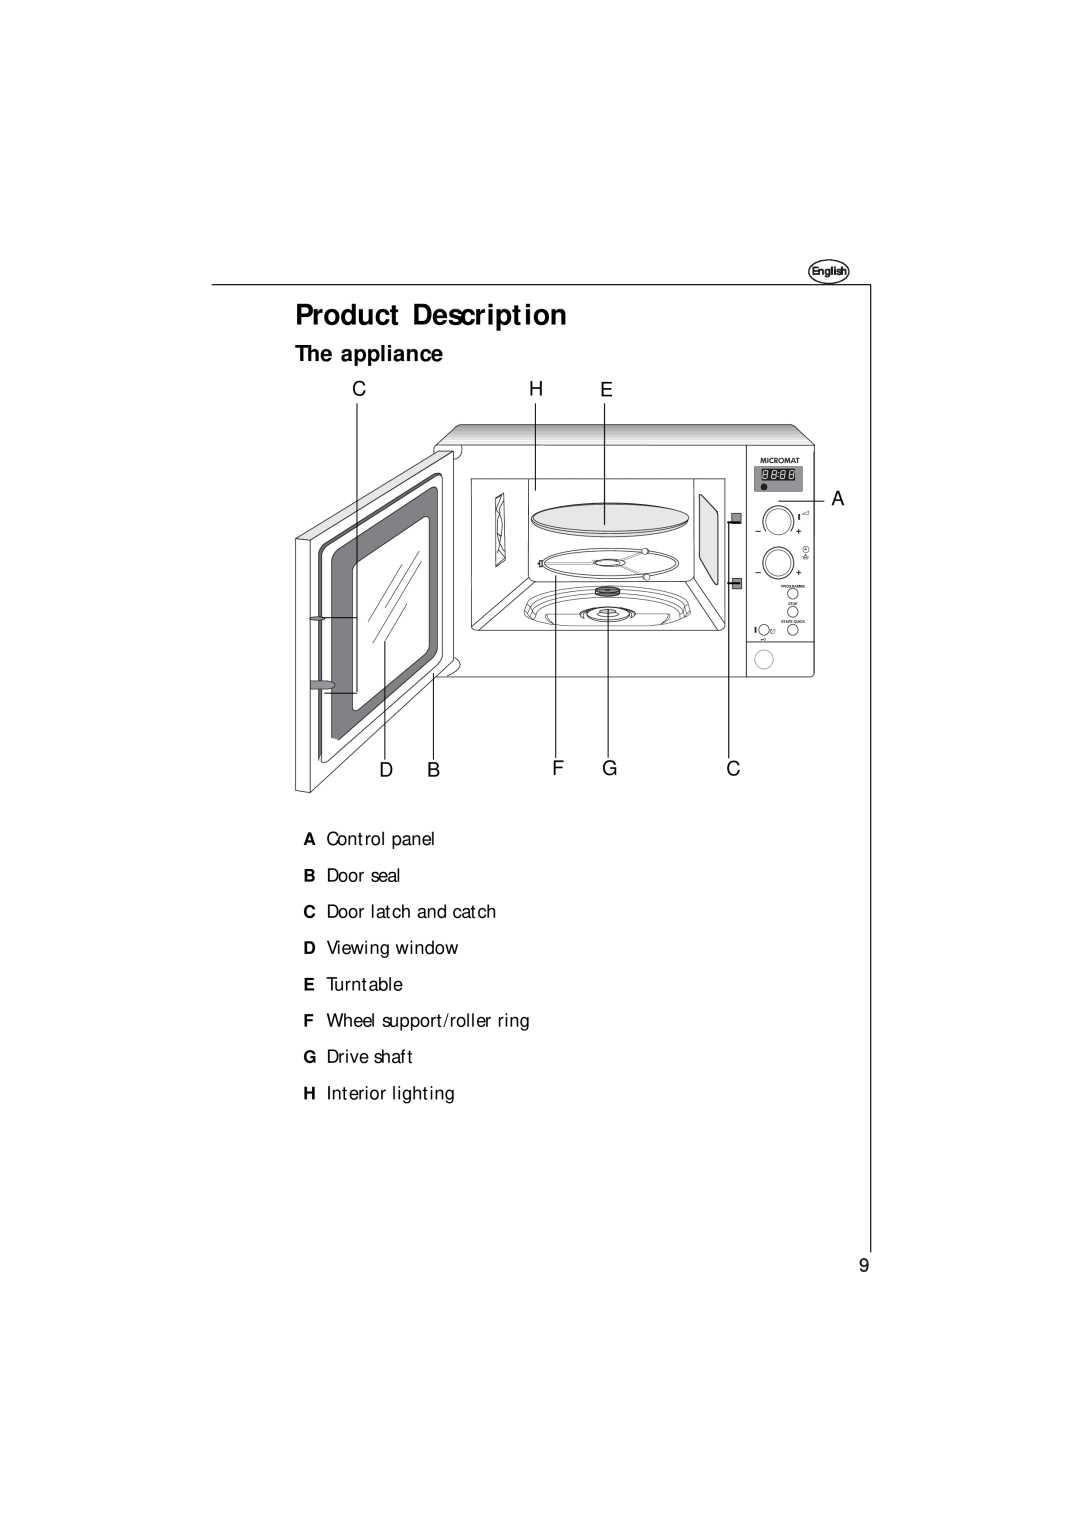 AEG 153 E manual Product Description, The appliance, English, Programme, Stop, Start/Quick 